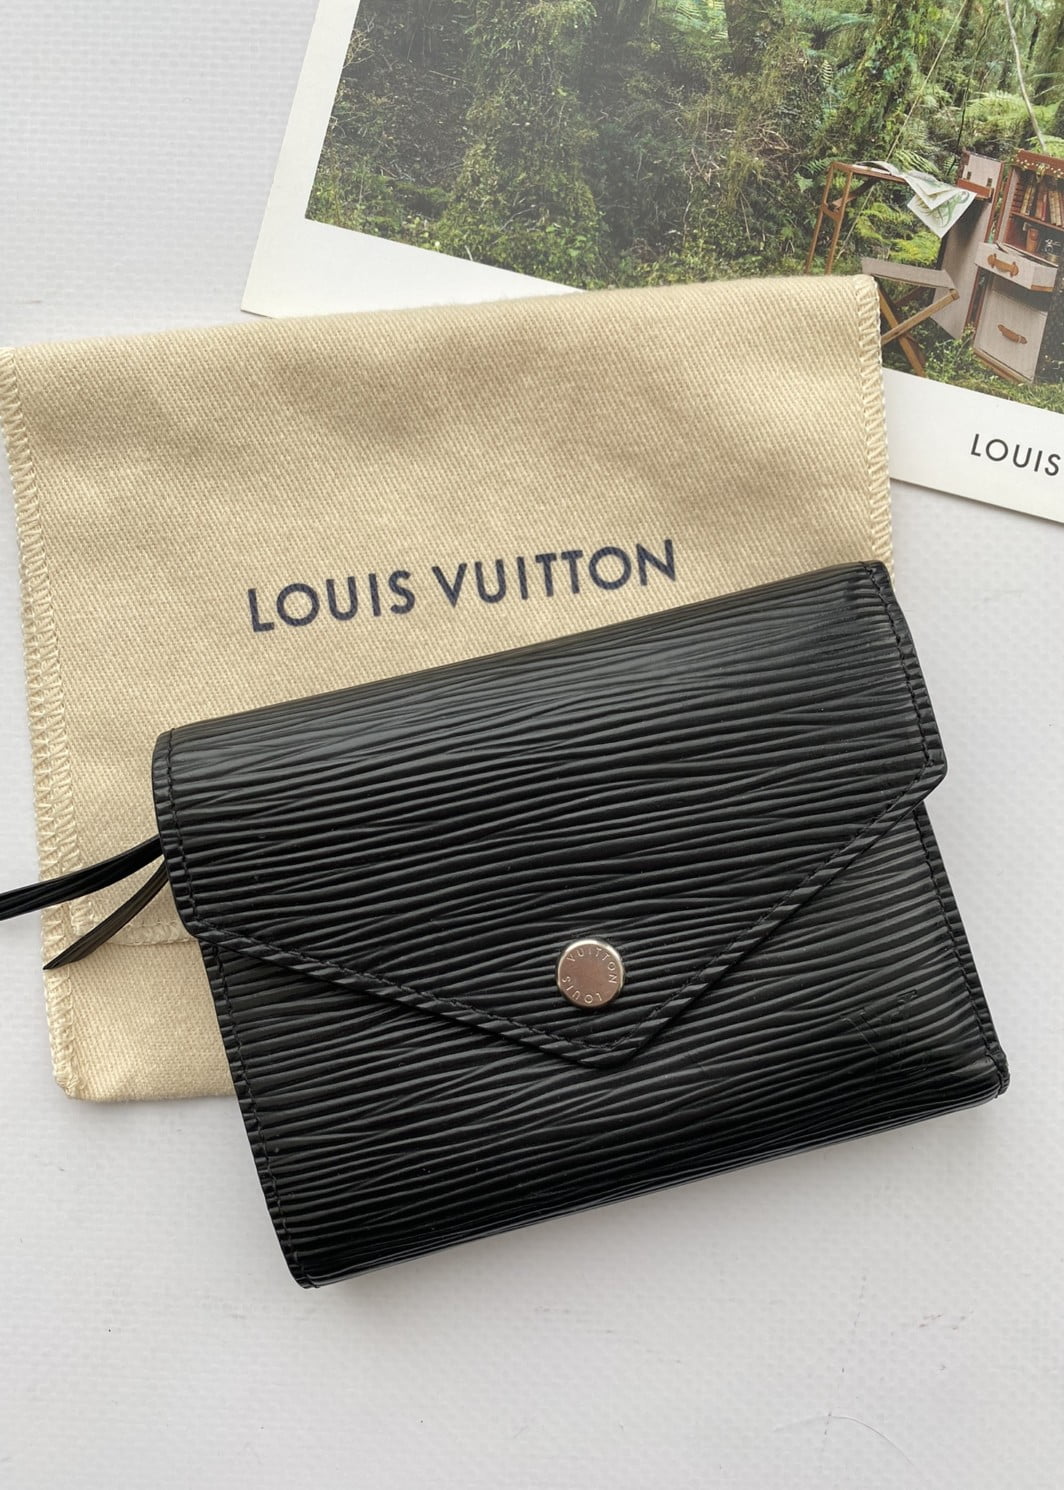 Браслет Louis Vuitton Confidential Leopard